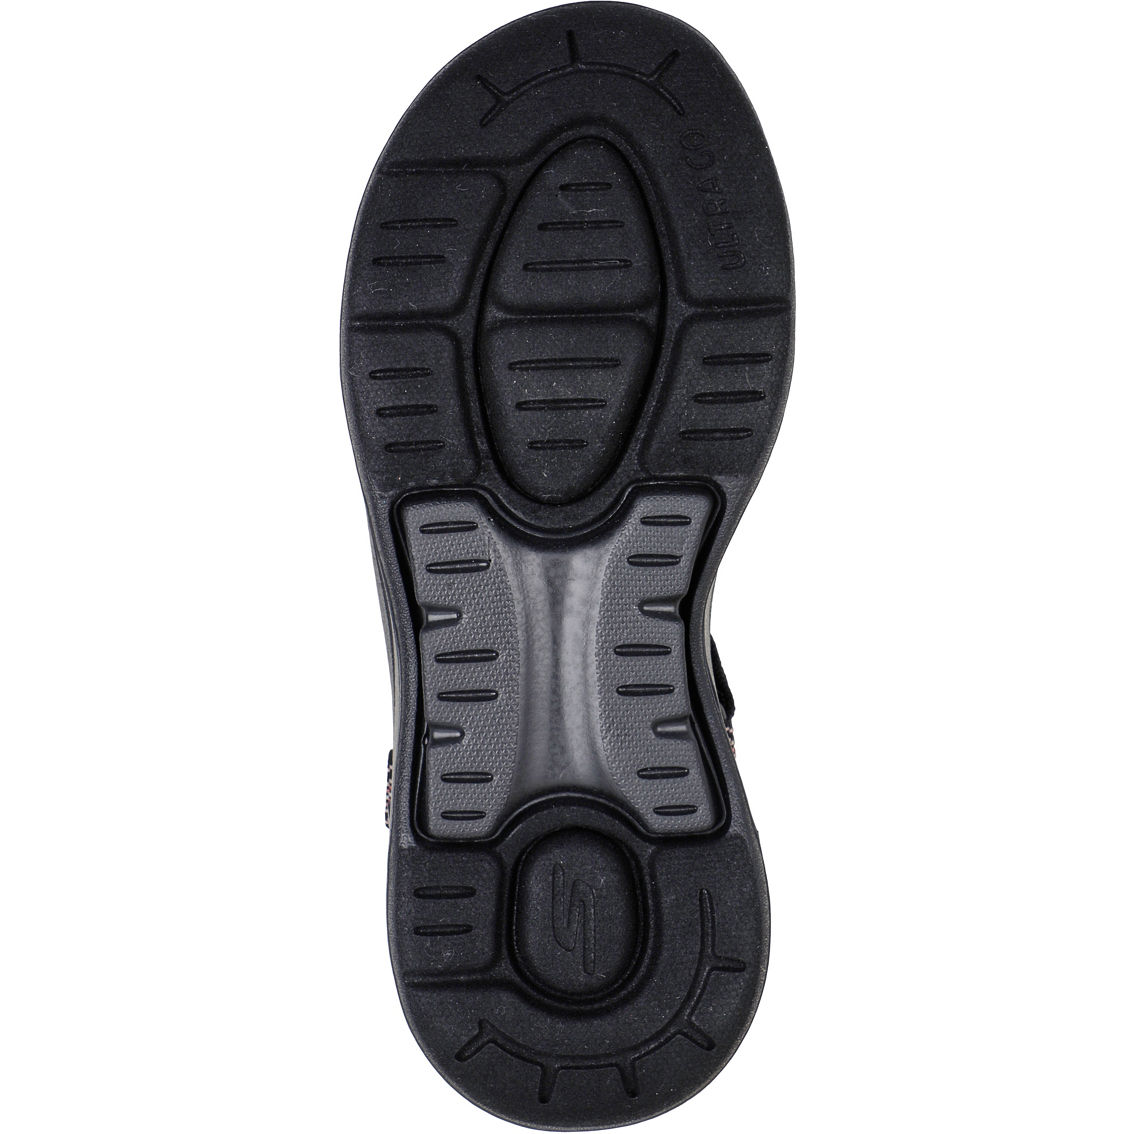 Skechers Women's Go Walk Arch Fit Affinity Quarter Strap Sandals - Image 5 of 5